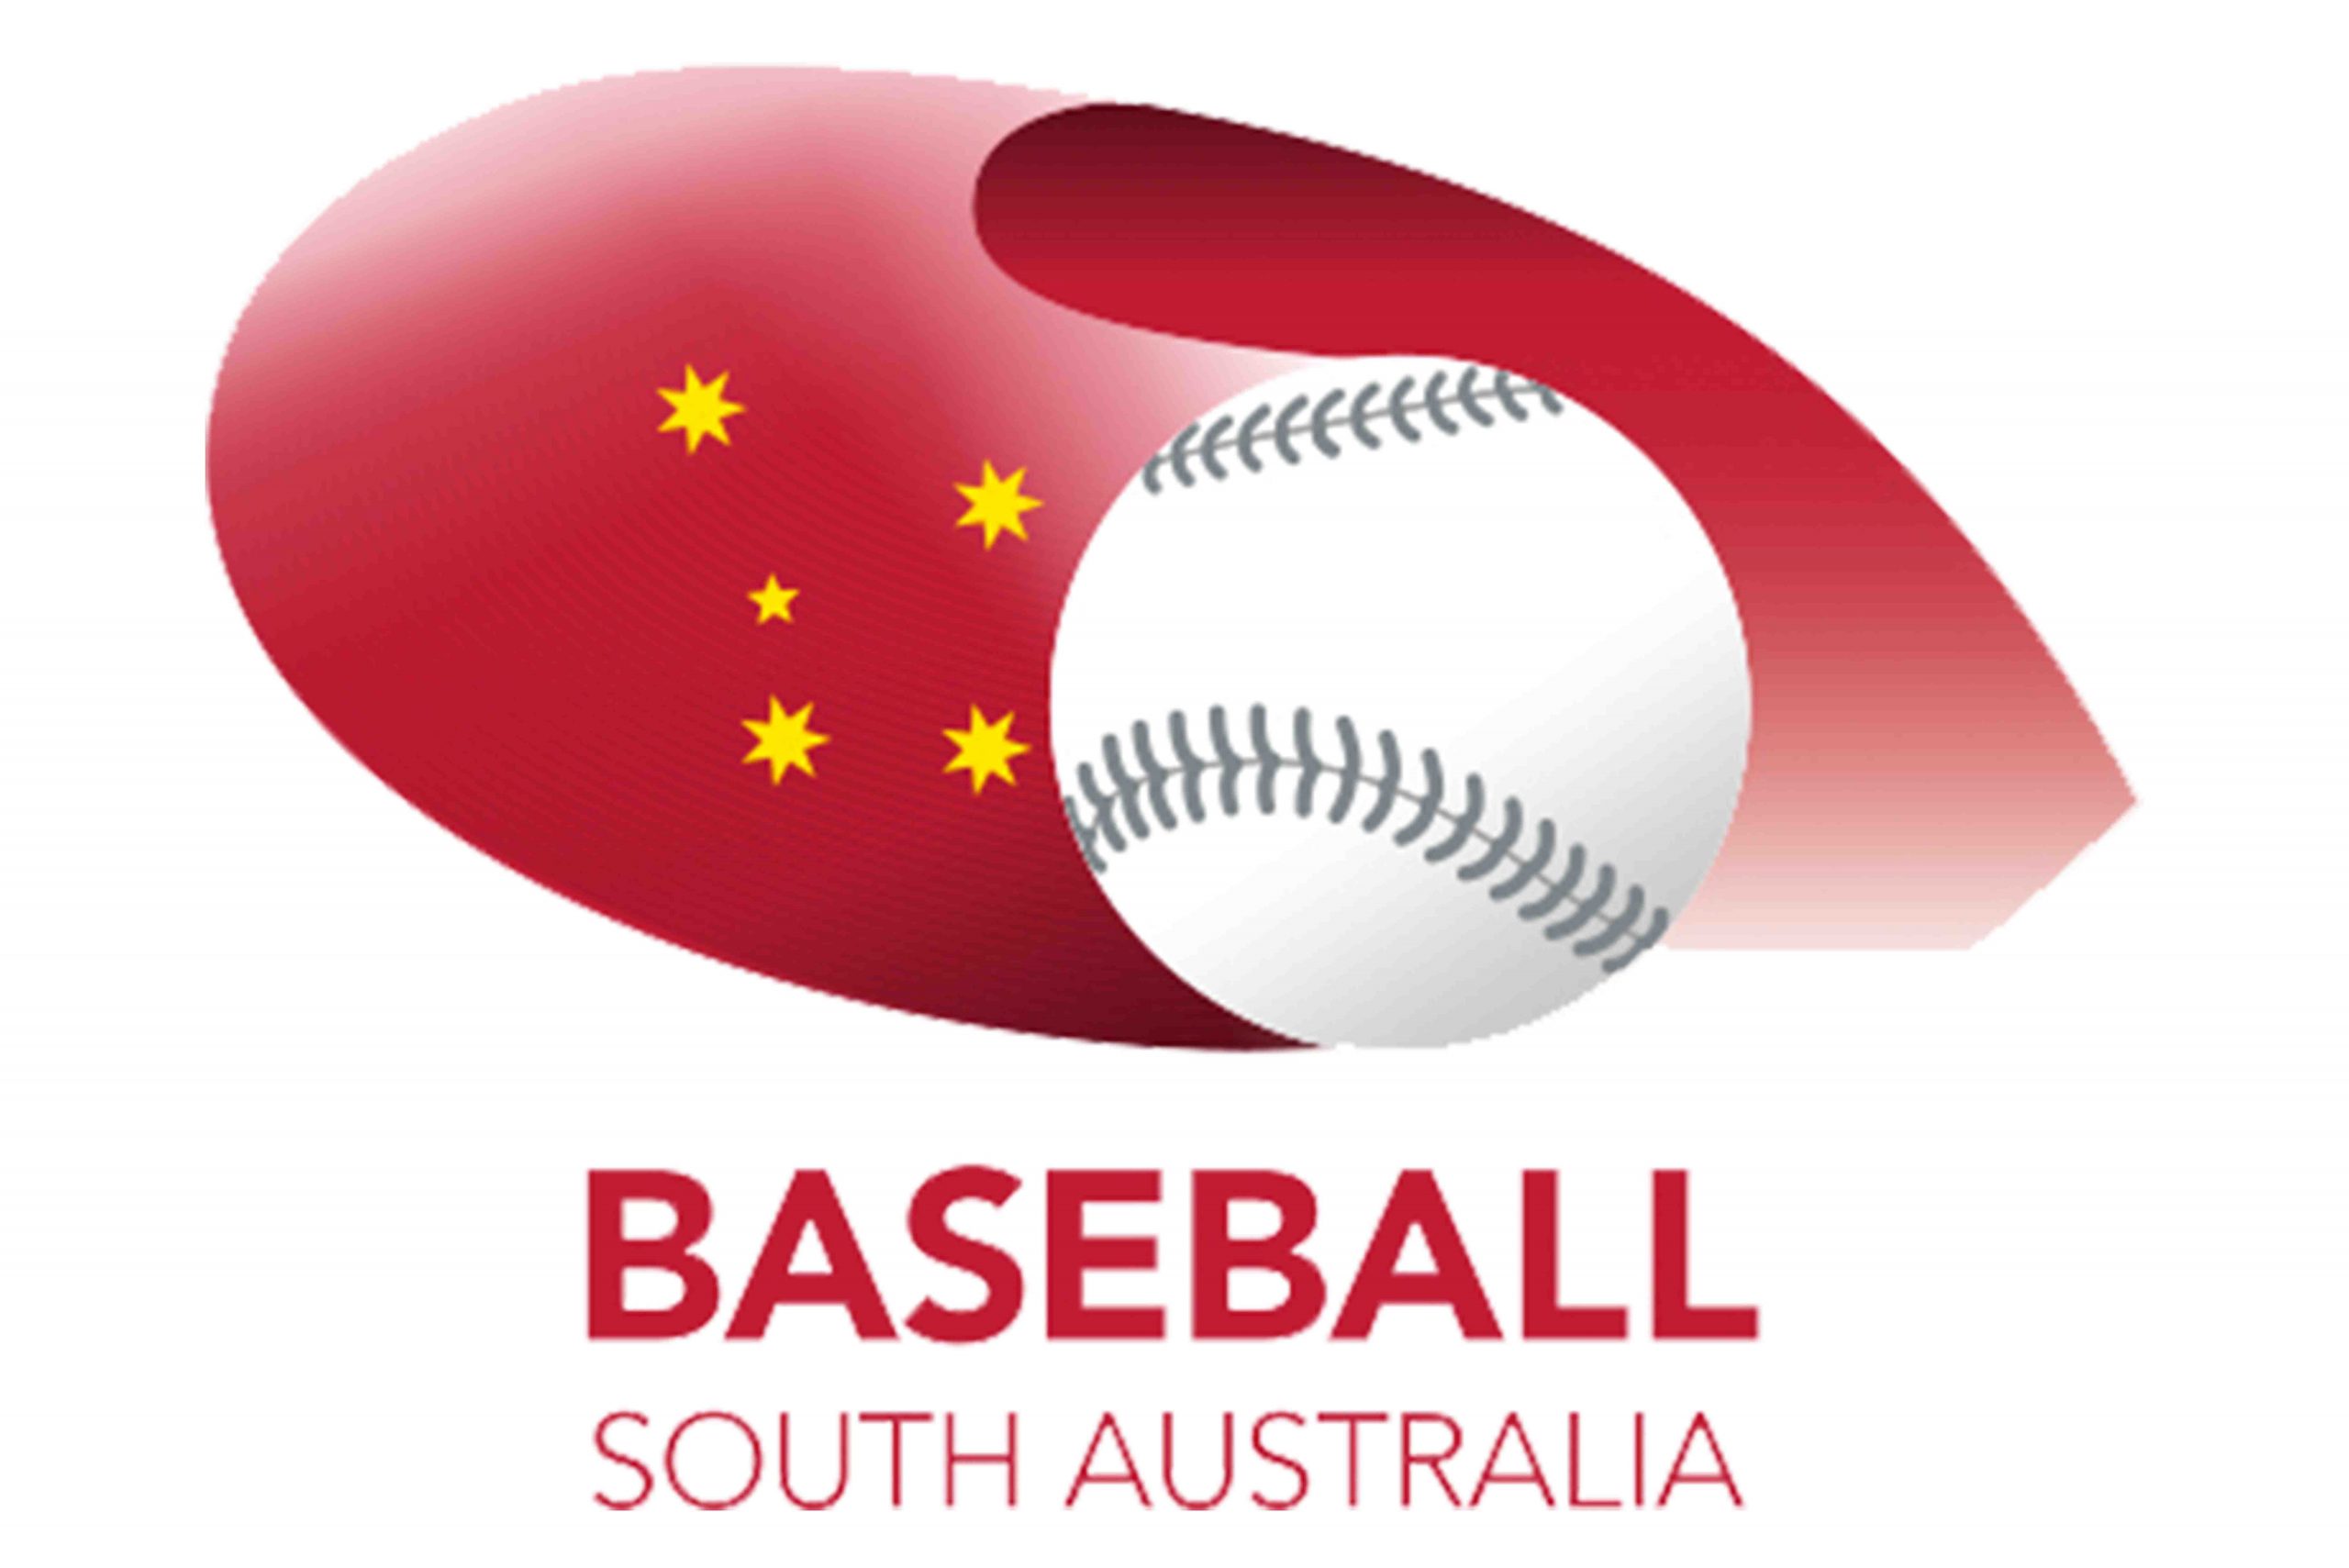 Baseball South Australia logo on a white background